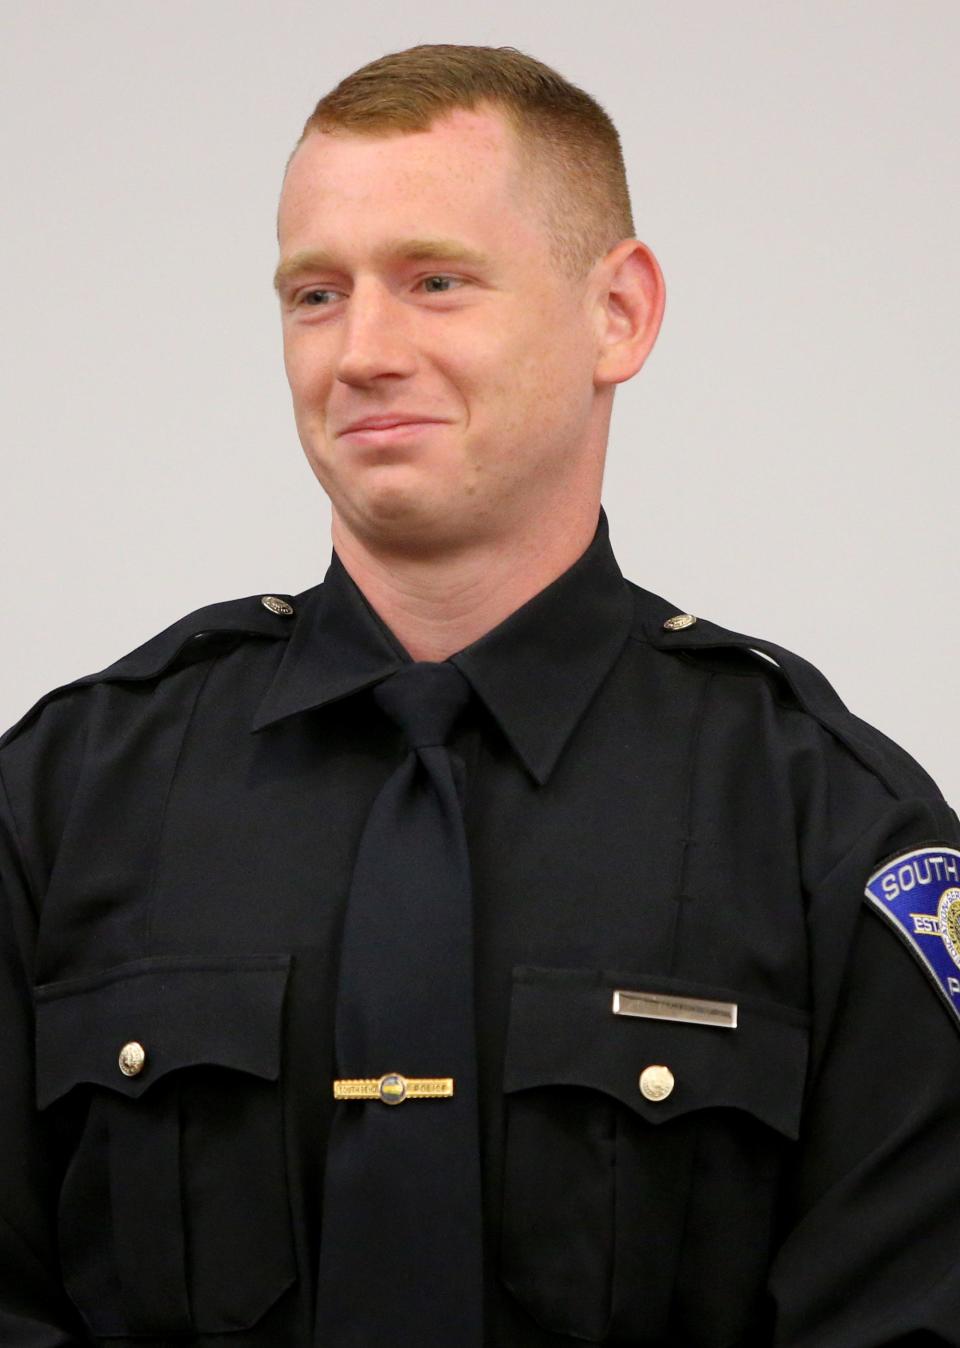 South Bend Police Officer Robert Neufer